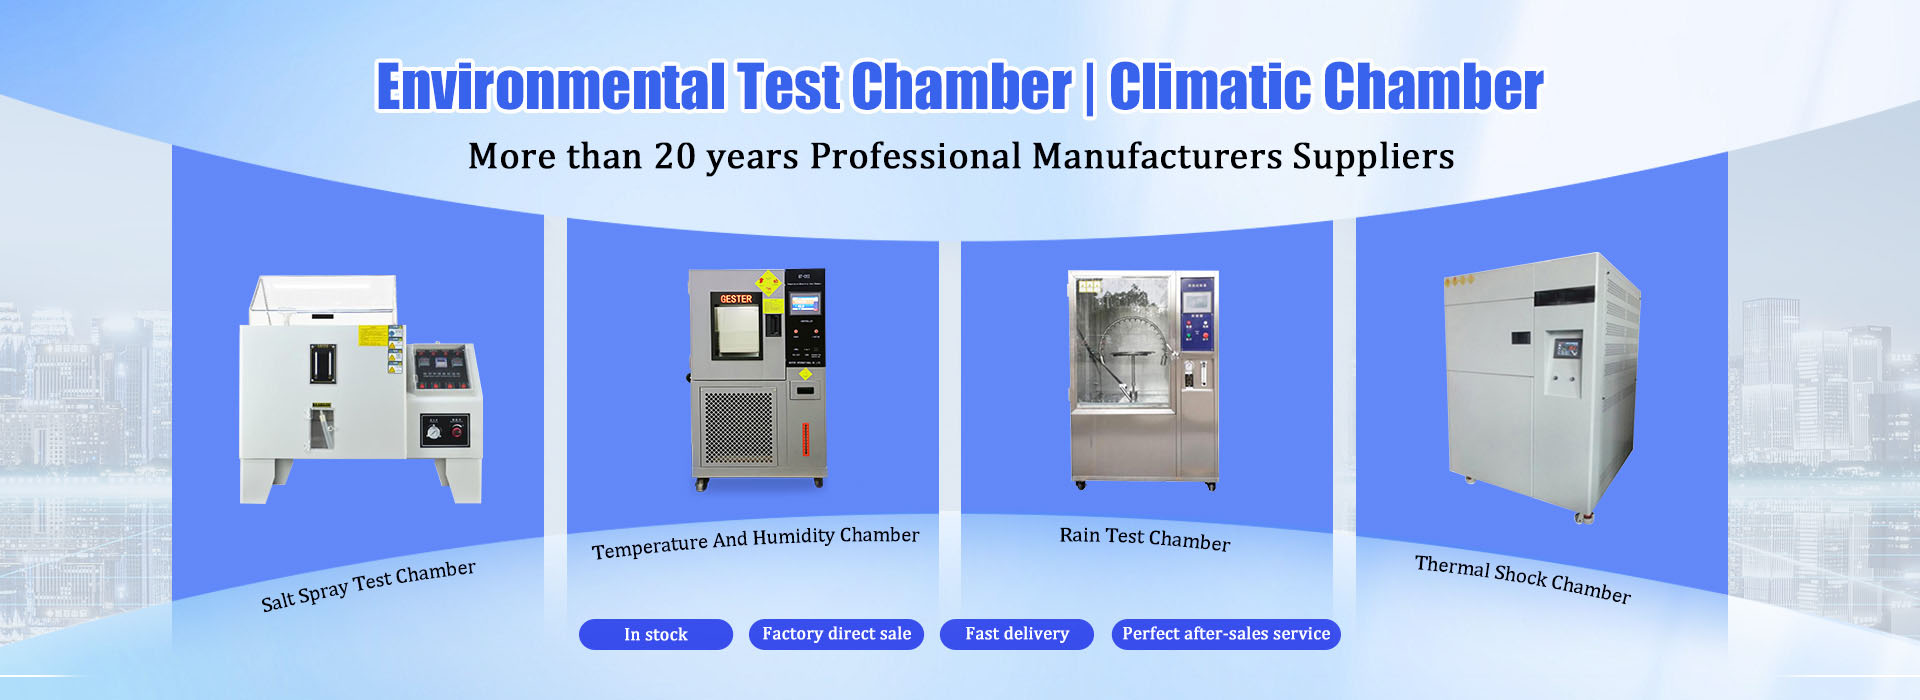 Environmental Test Chamber 